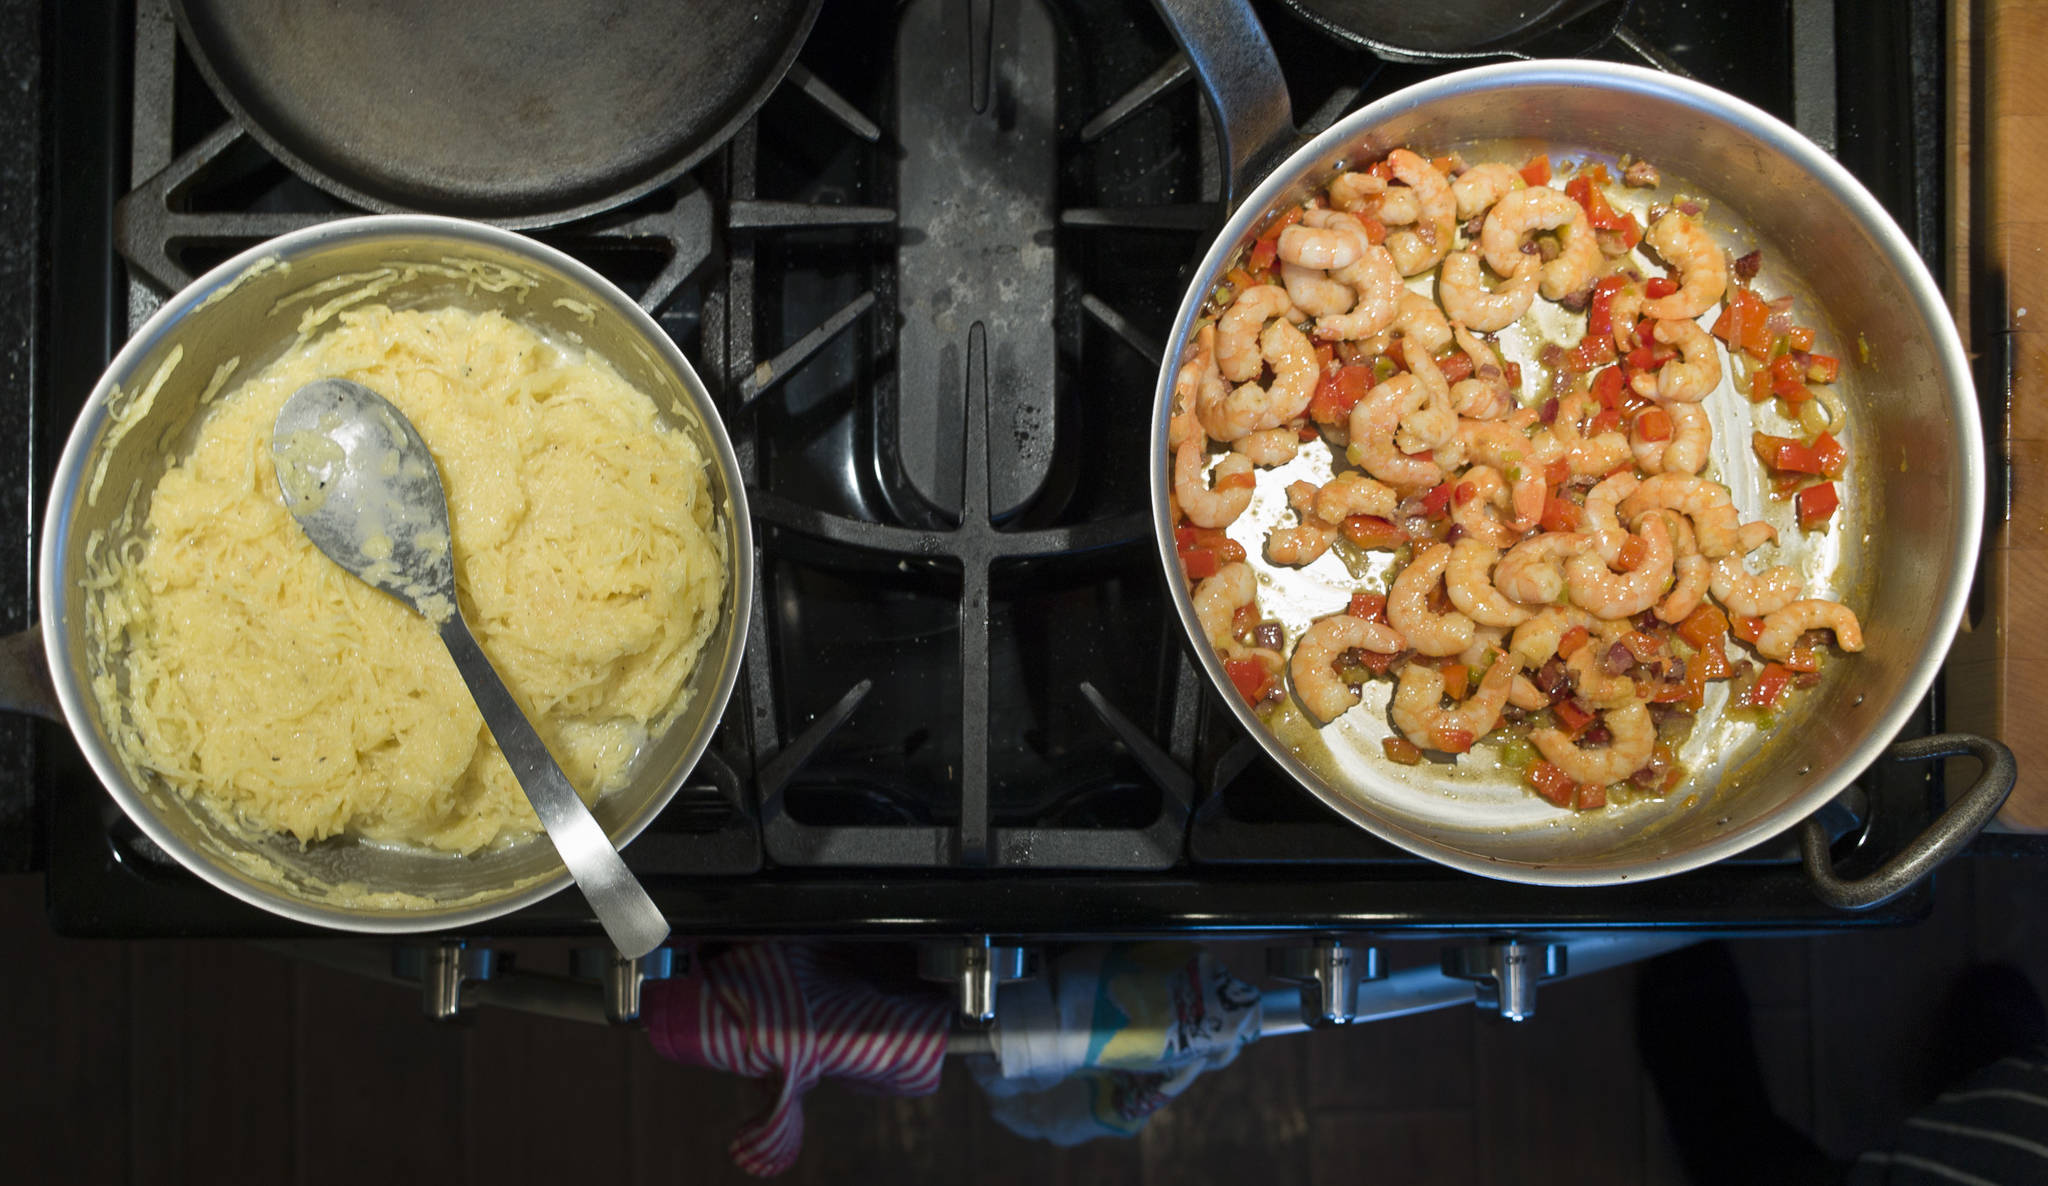 Erin Anais Heist prepares a spaghetti squash, prawns, bacon and egg breakfast dish in her home kitchen on Thursday, March 28, 2019. (Michael Penn | Juneau Empire)